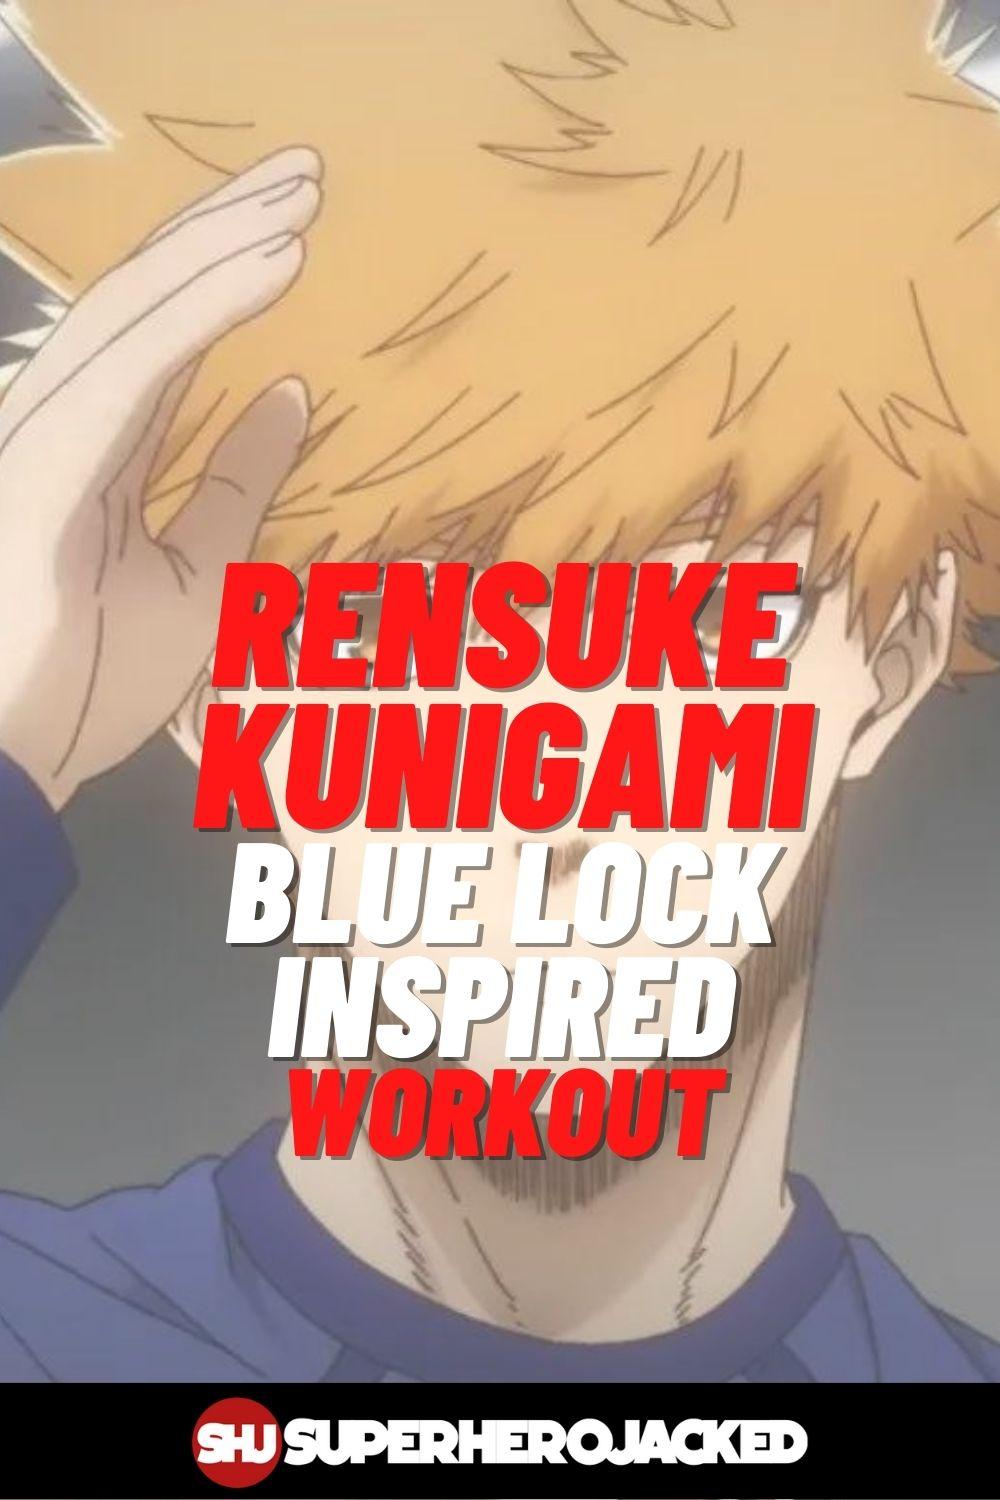 Rensuke Kunigami Workout 1